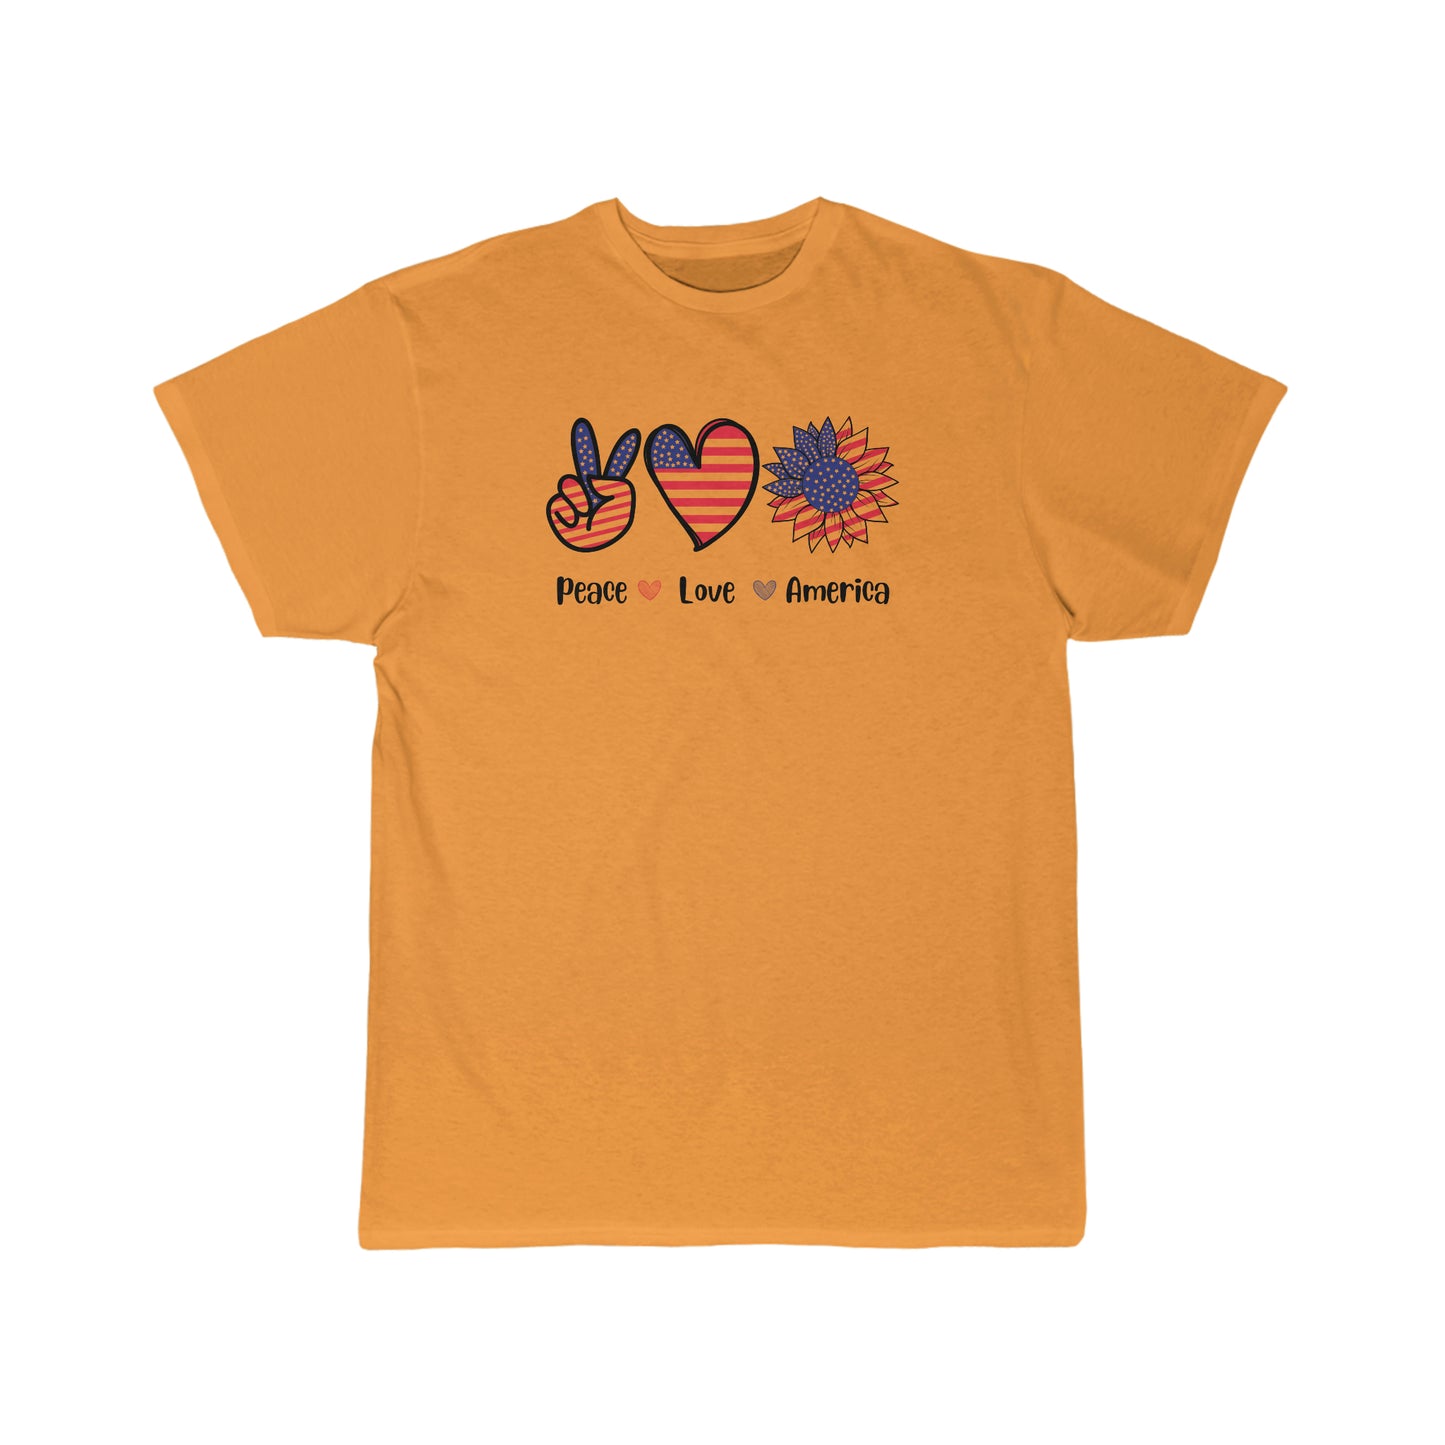 Peace Love America, USA Flag Shirt, 4th of July Shirt, Big USA T-shirt, USA Comfort Colors Shirt, Comfort Colors USA Flag Tee, USA Comfort Colors Tee, Usa Shirt Men's Short Sleeve Tee